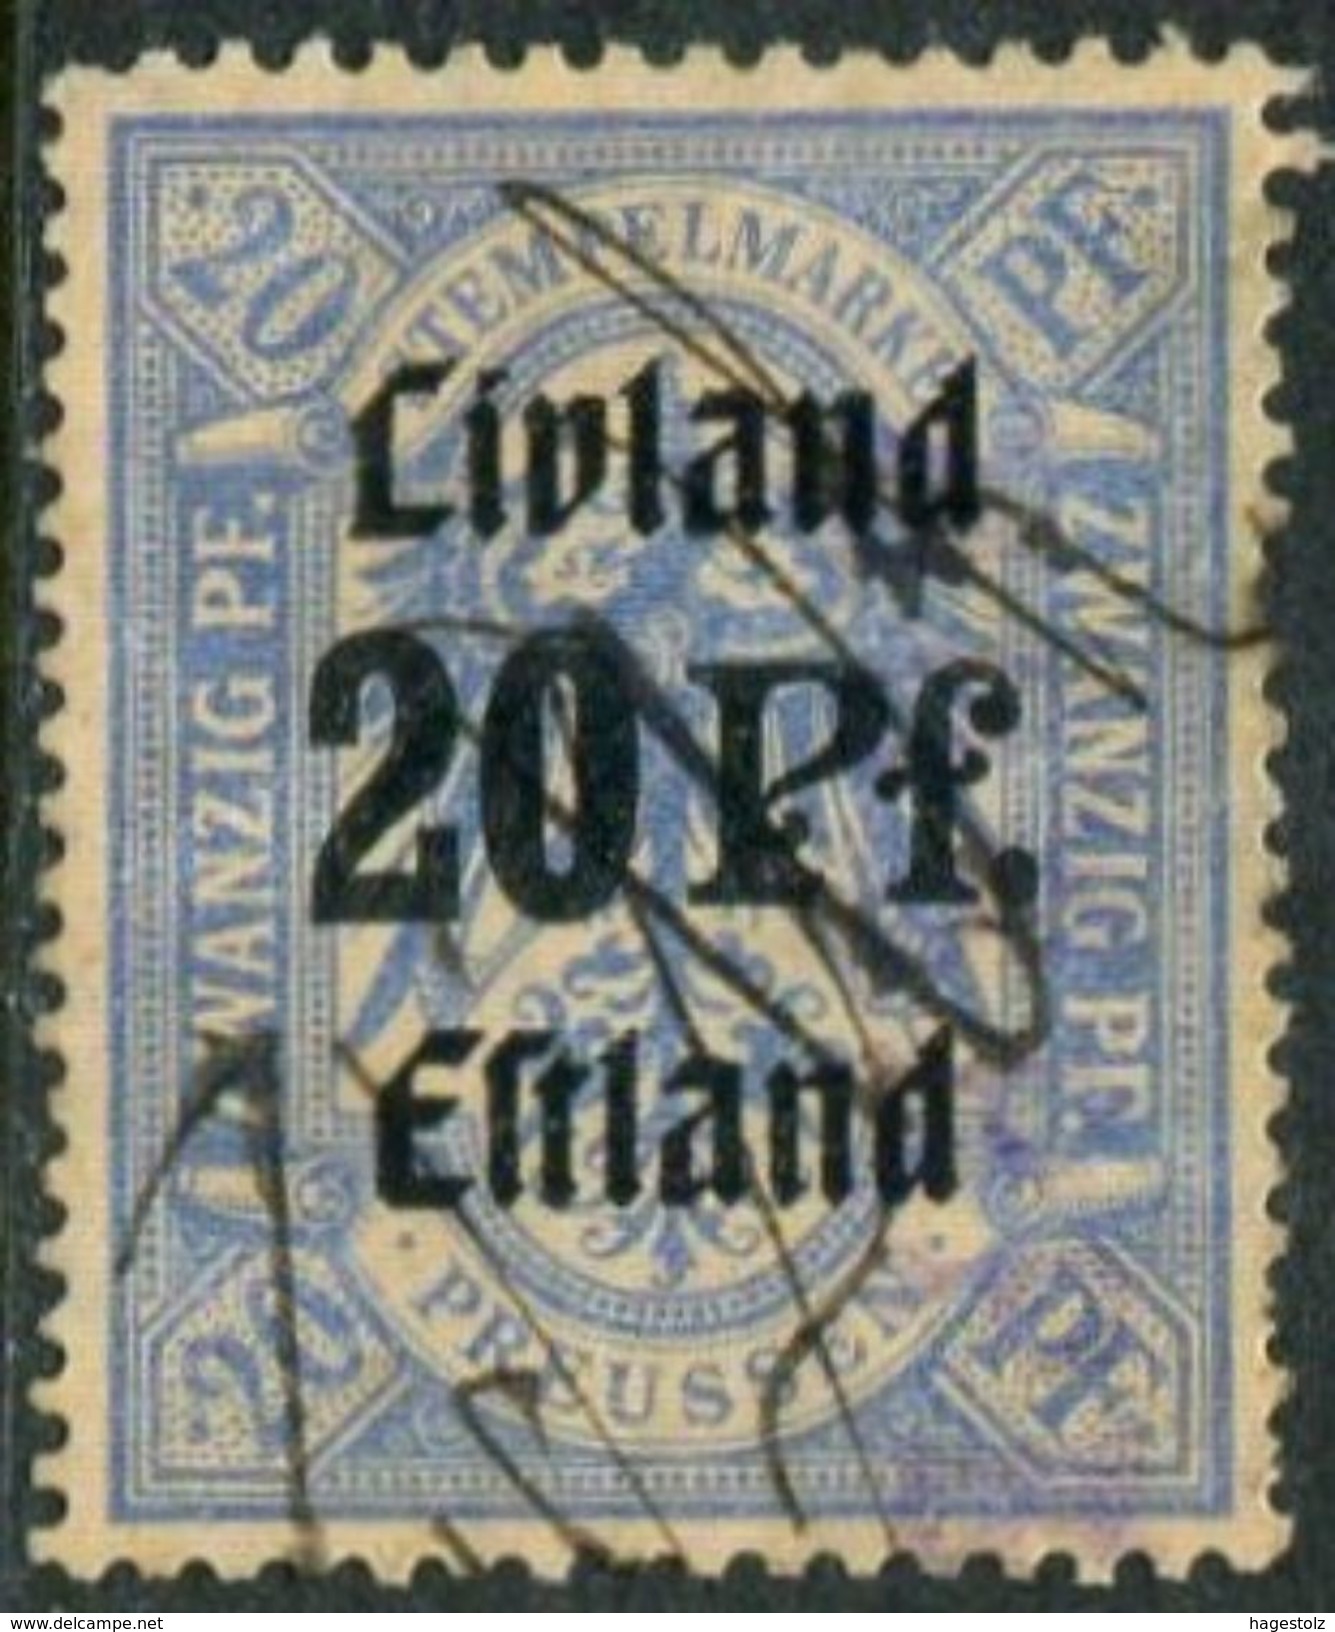 Estonia Estland 1919 PROVISIONAL Livland-Estland German Occupation Revenue 20 Pf With Unidentified Straight Line H/stamp - Estonia